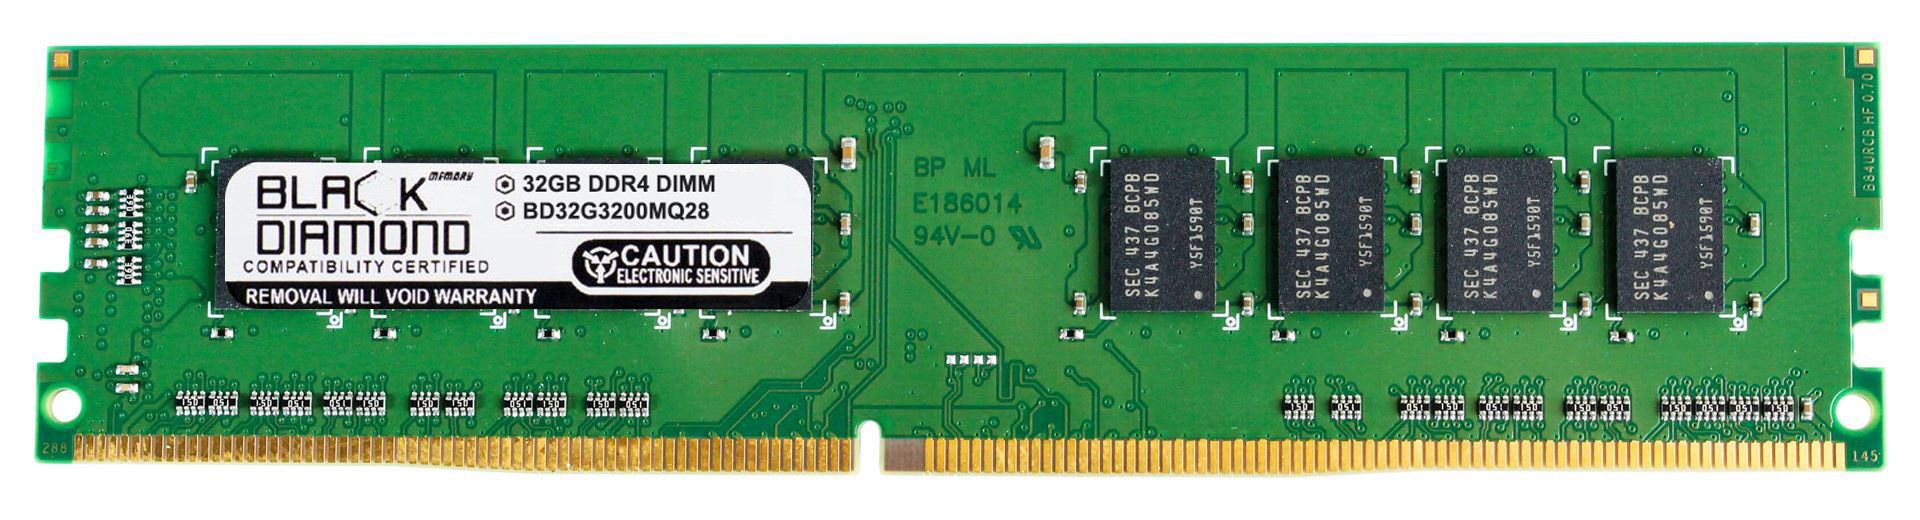 32GB Memory EVGA Motherboards,150-HE-E997-KR,151-SS-E179-KR,EVGA H370 Stinger - image 1 of 1